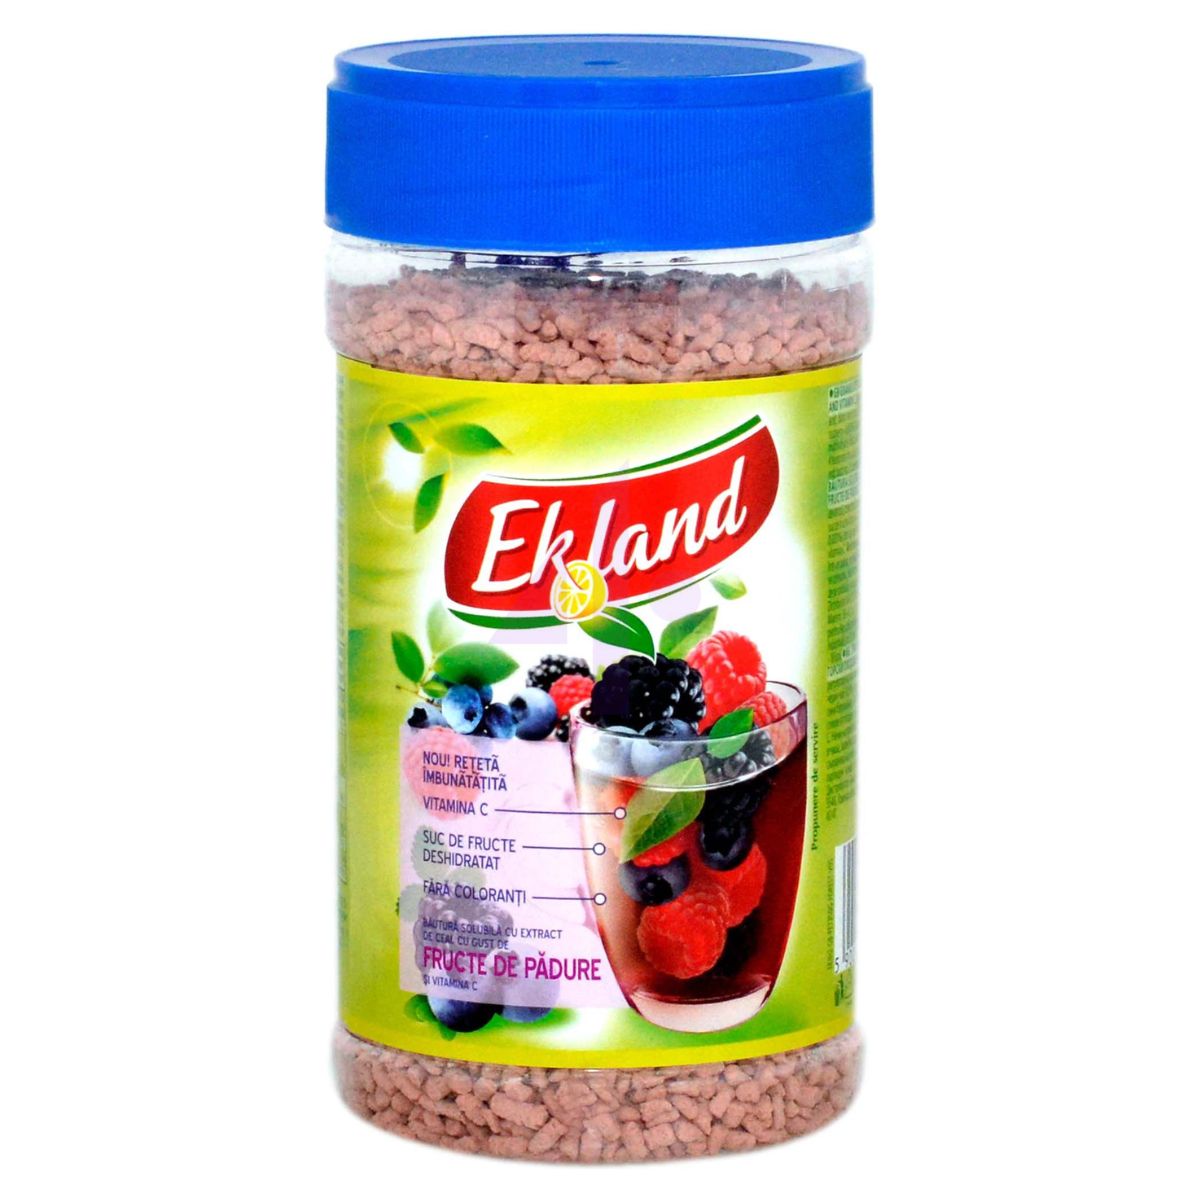 A jar of Ekoland - Forest Fruit Granulated Instant Tea - 350g.